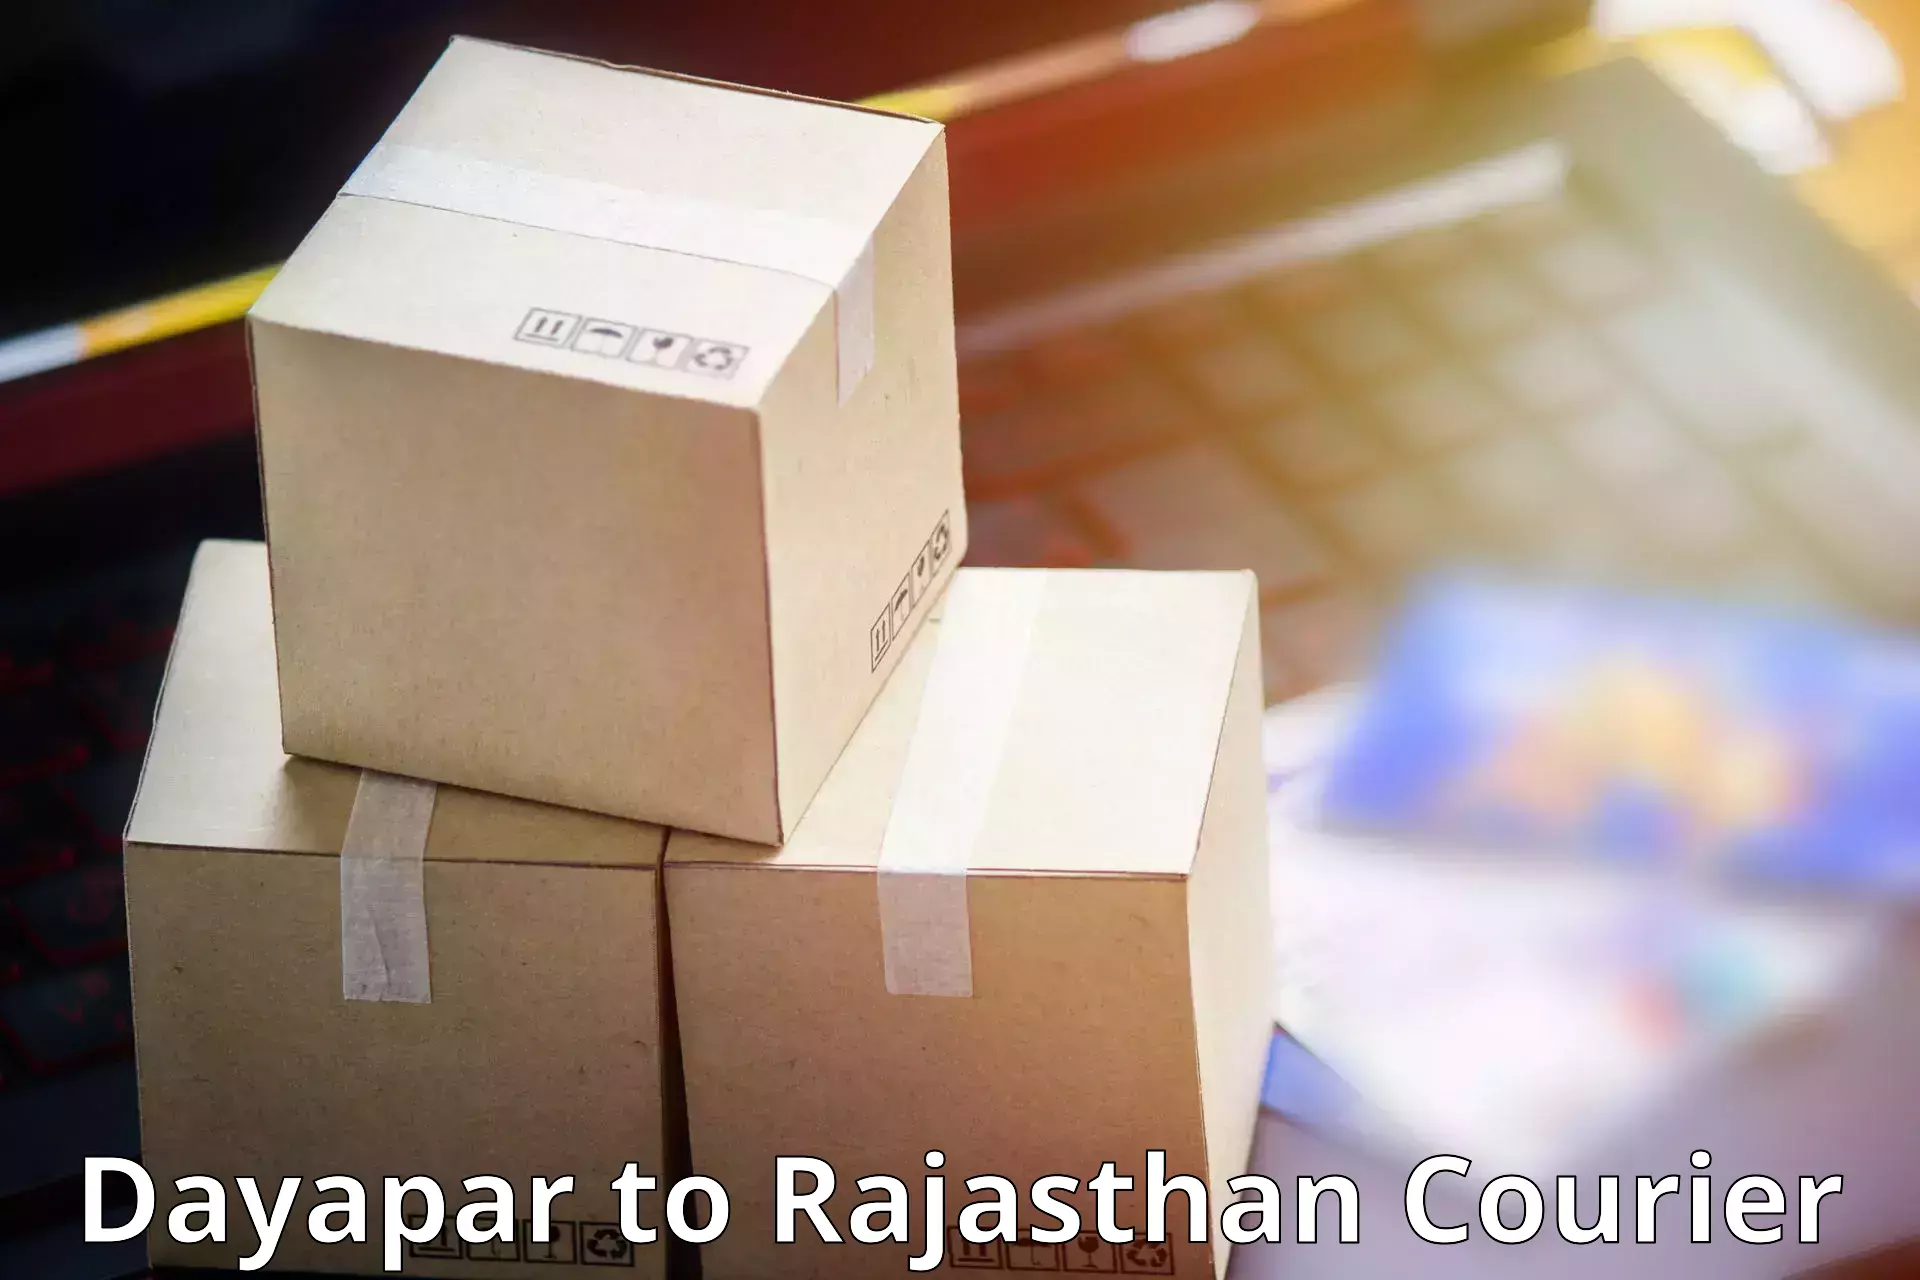 Full-service courier options Dayapar to Lalsot